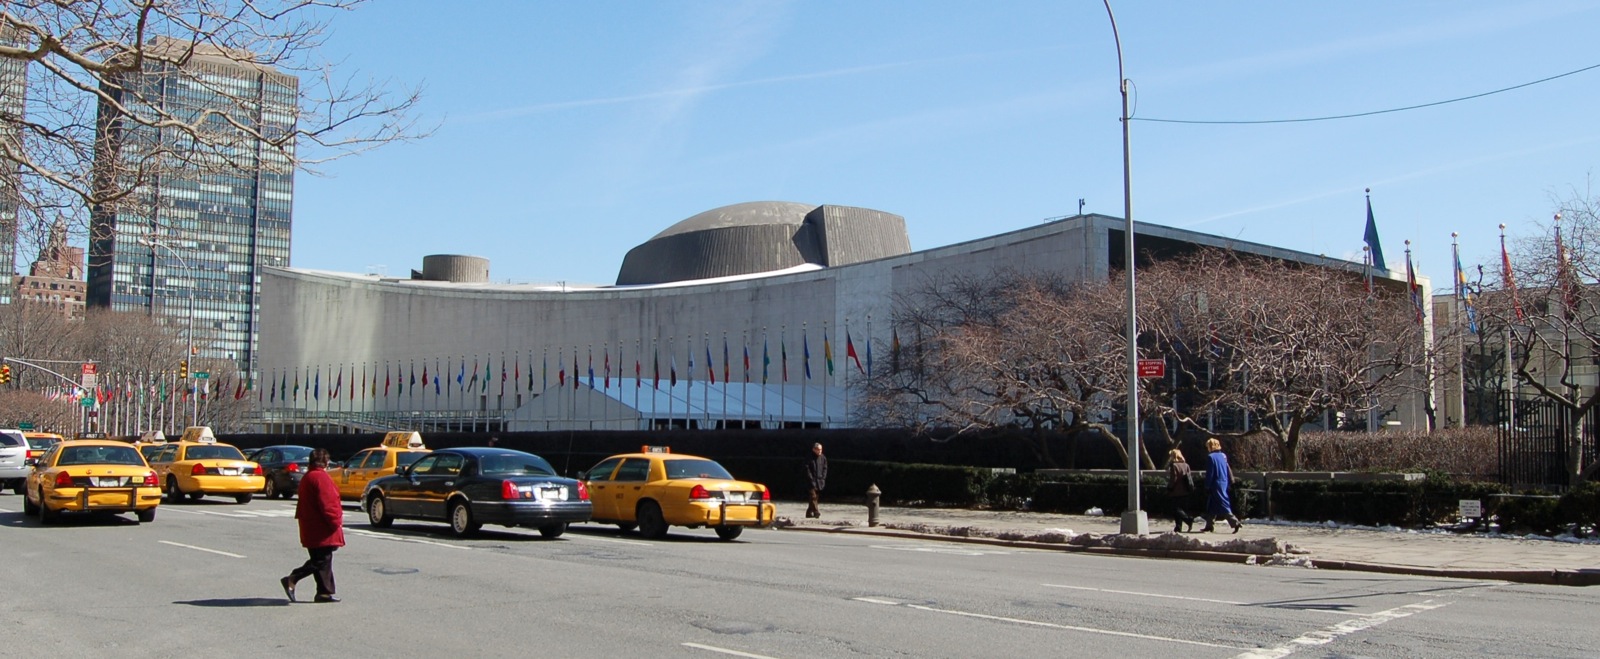 UN_General_Assembly_building.jpg